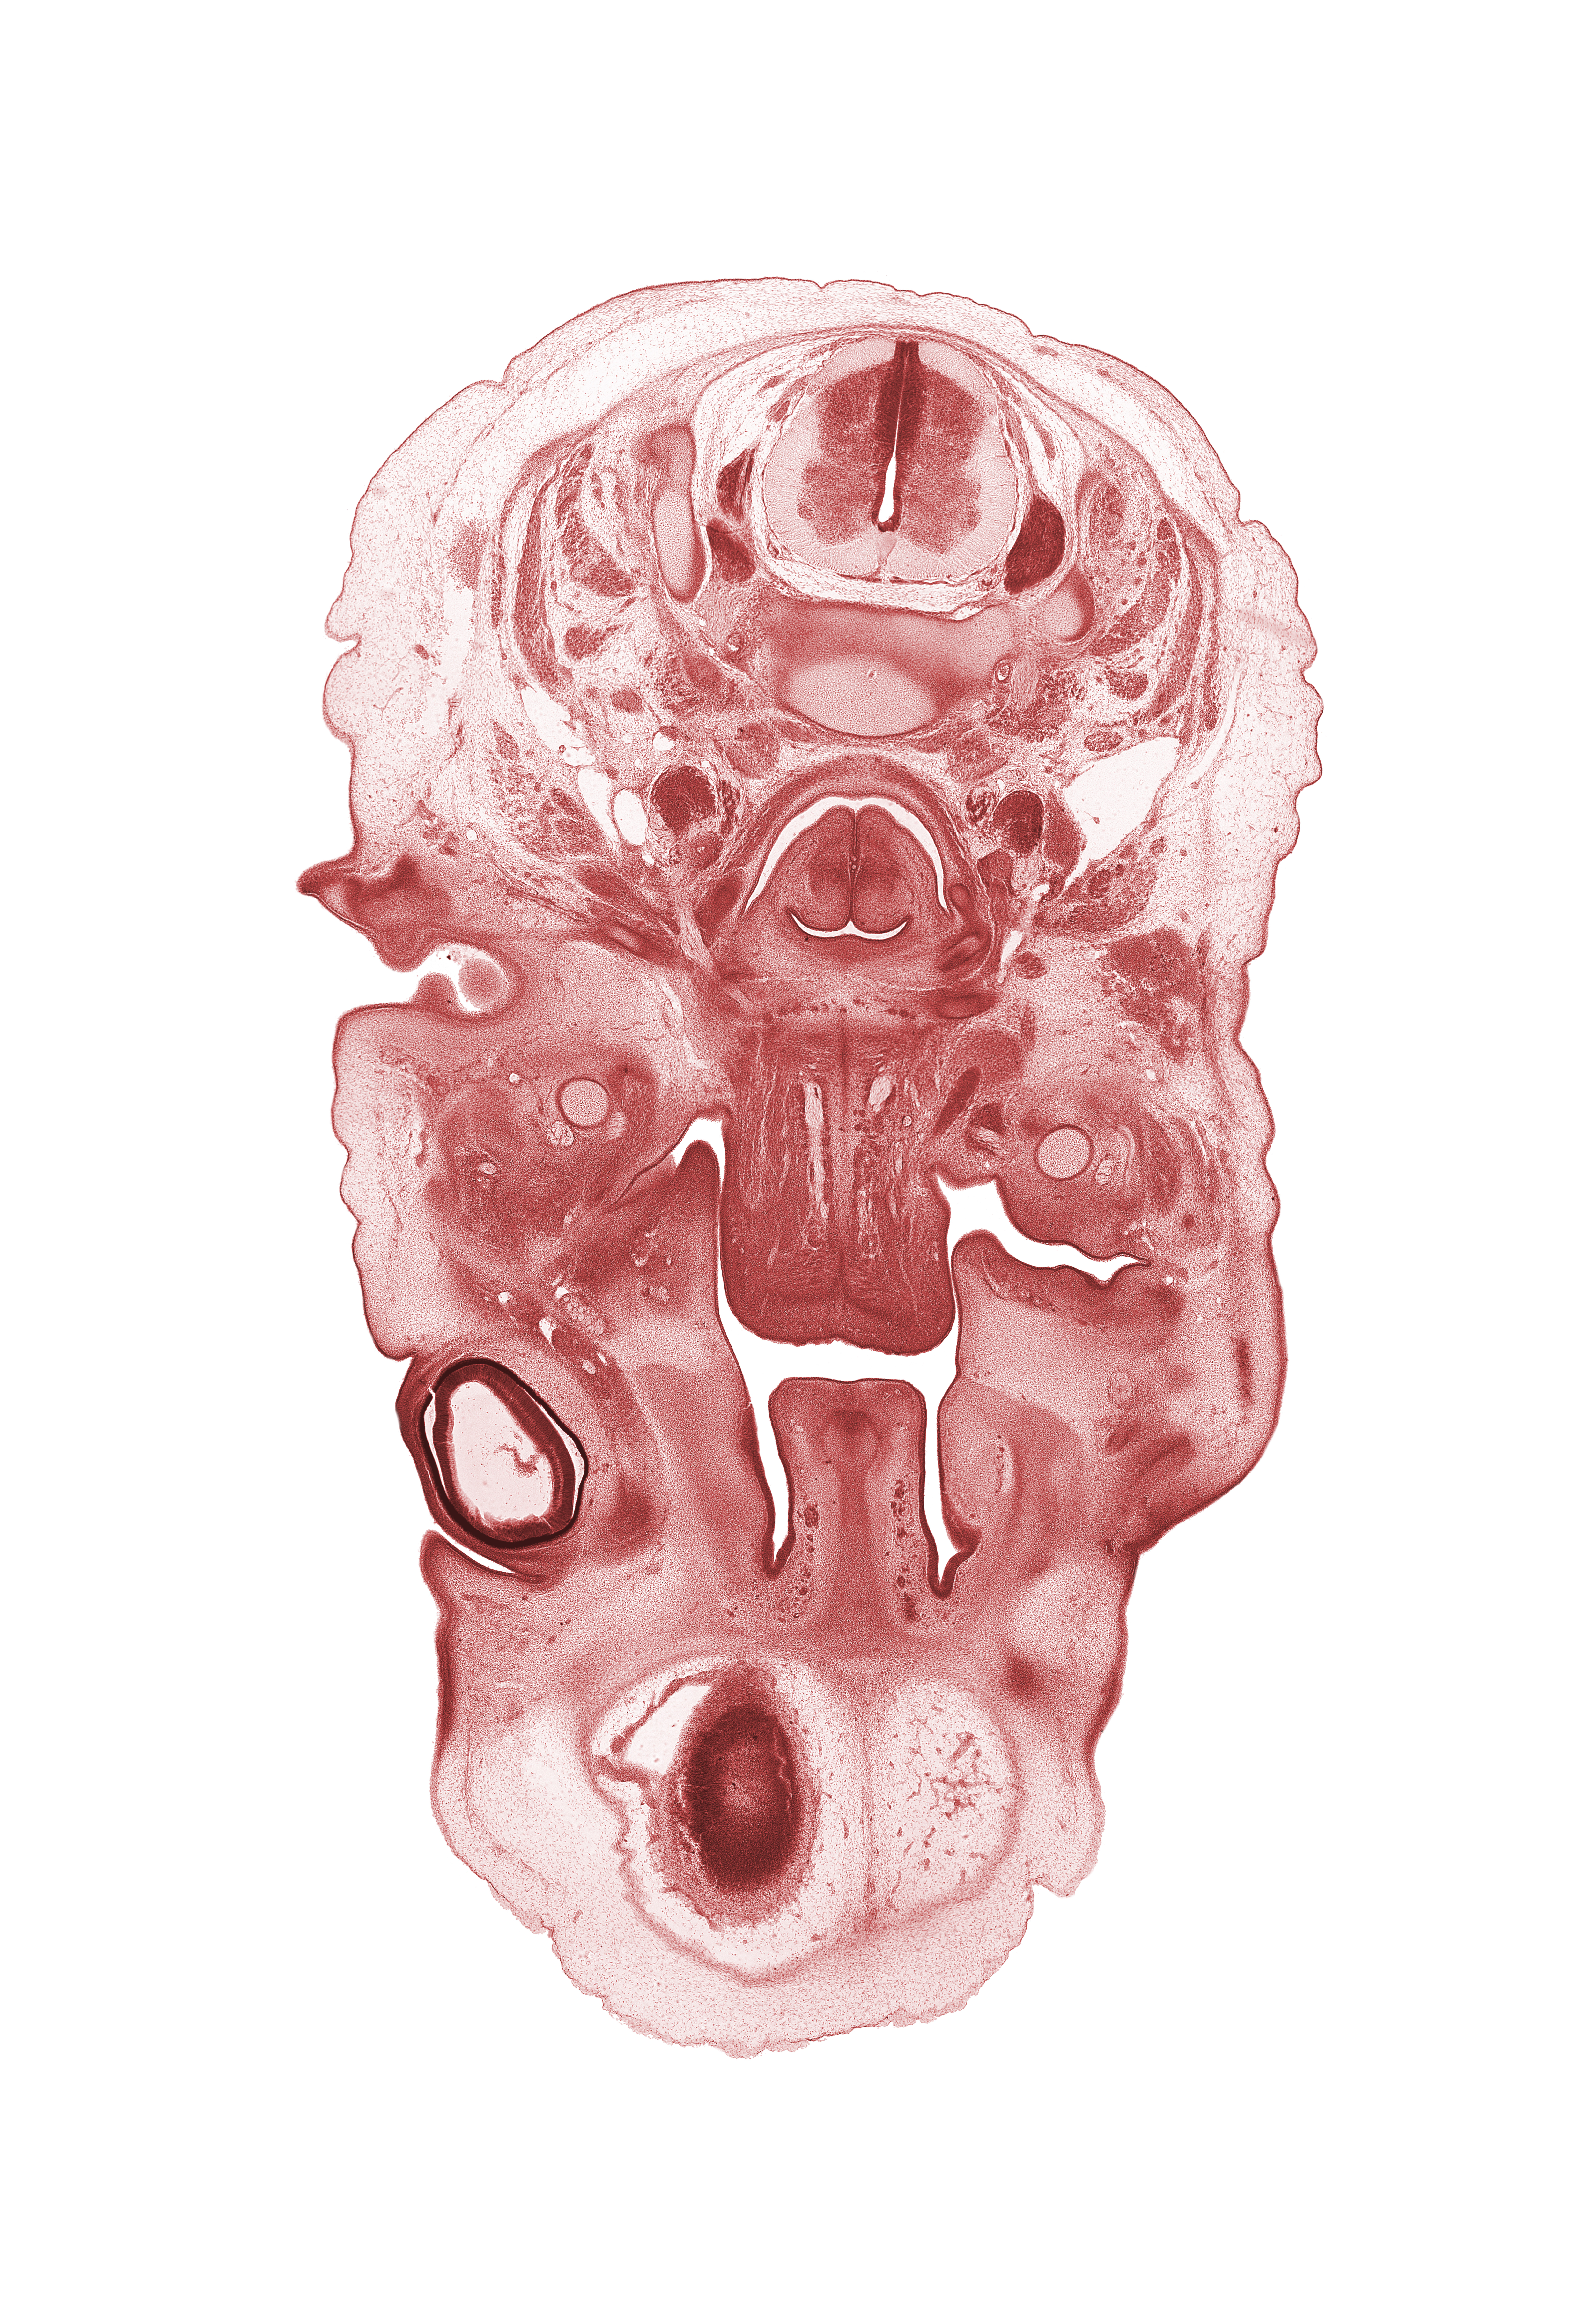 C-3 / C-4 intervertebral disc, C-4 spinal ganglion, C-4 spinal nerve, cerebral vesicle (telencephalon), choana, crista galli, ethmoid condensation, external acoustic meatus, falx cerebri region, infra-orbital region, internal carotid artery, lower eyelid, nasal cavity (nasal sac), neural layer of retina, oral cavity, palatine shelf, pigmented layer of retina, spinal accessory nerve (CN XI), splenius muscle, sternocleidomastoid muscle, subarachnoid space, trapezius muscle, upper eyelid